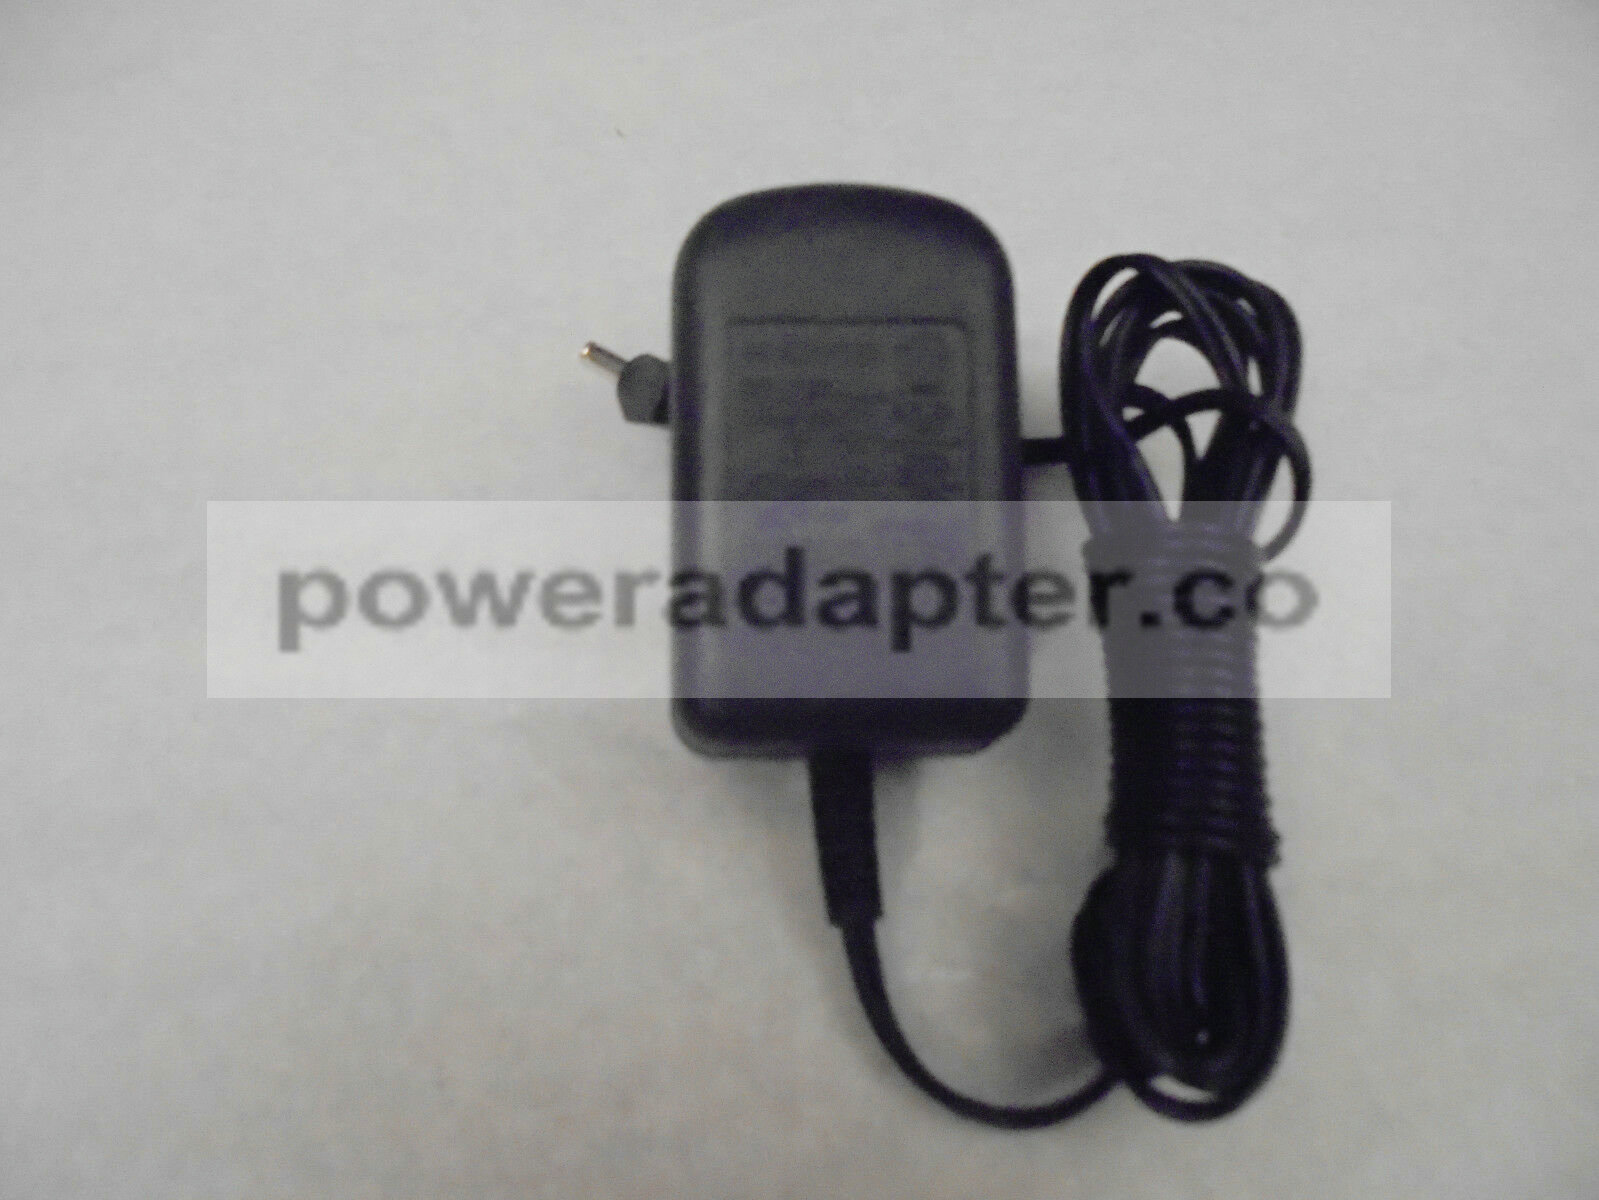 AC Power Adapter PS-0035 Phone Handset Charger 120V 60HZ Output: 8V 300MA Output Voltage: 6V Modified Item: No Brand: